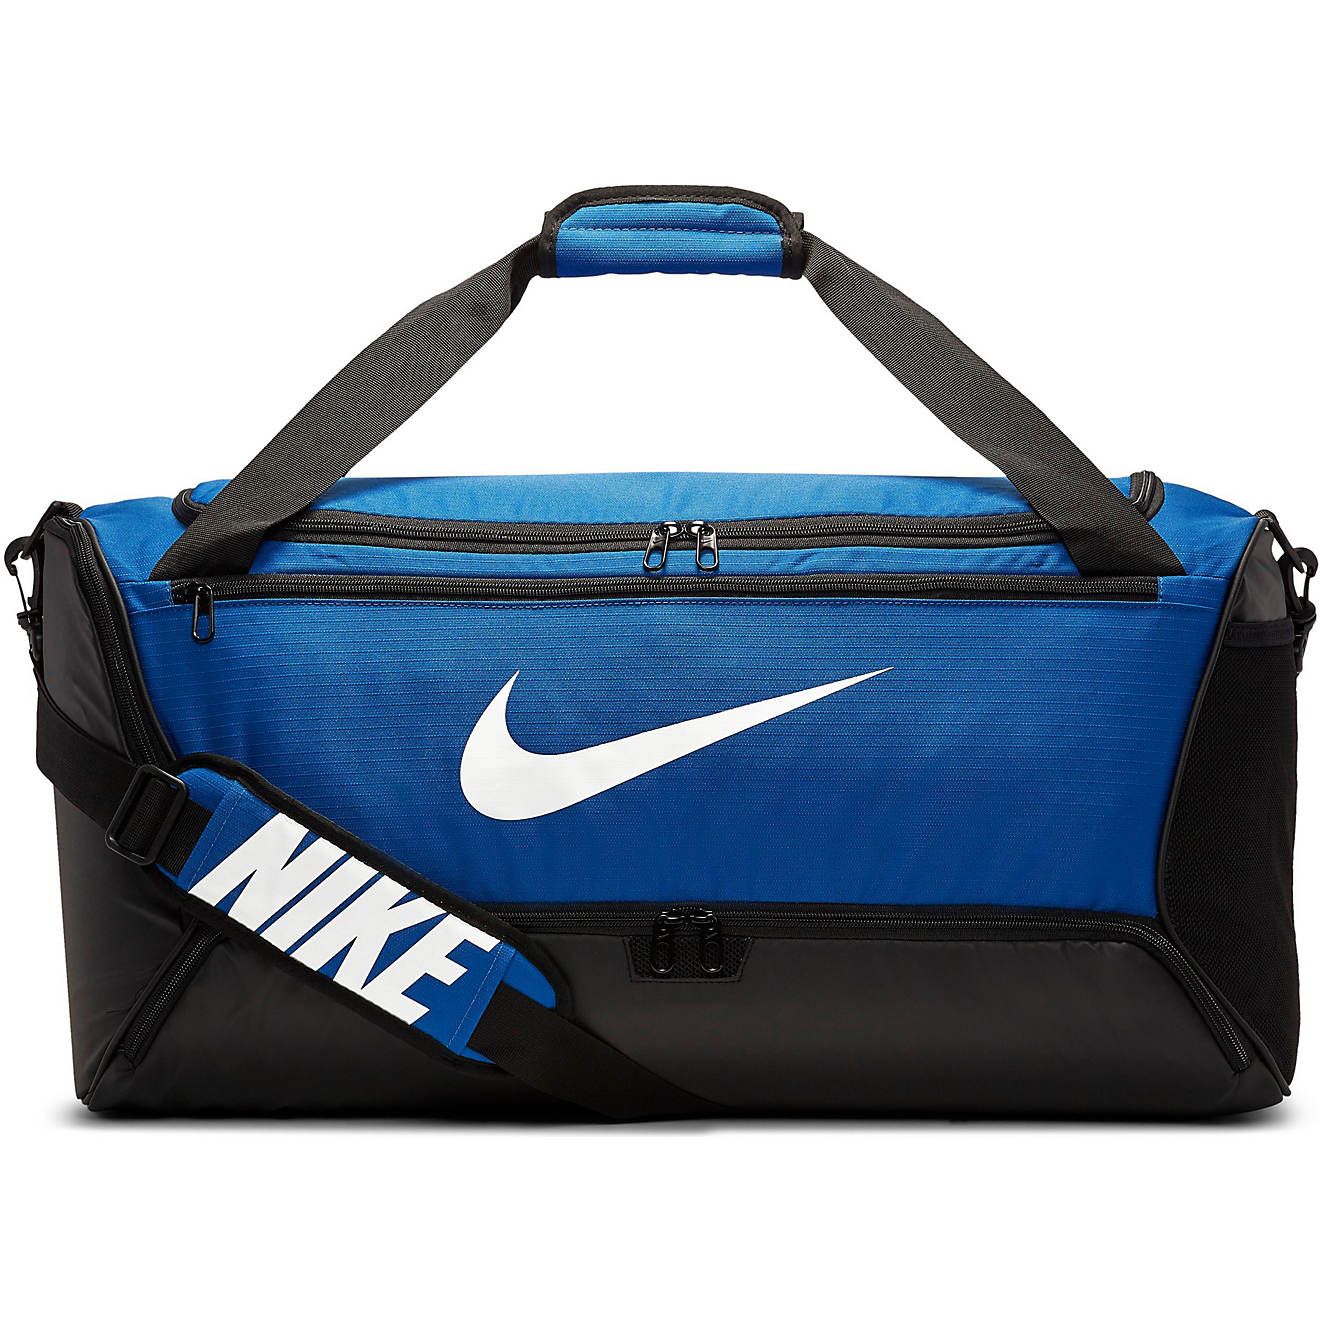 Nike Brasilia 9 Training Duffel Bag | Academy | Academy Sports + Outdoors